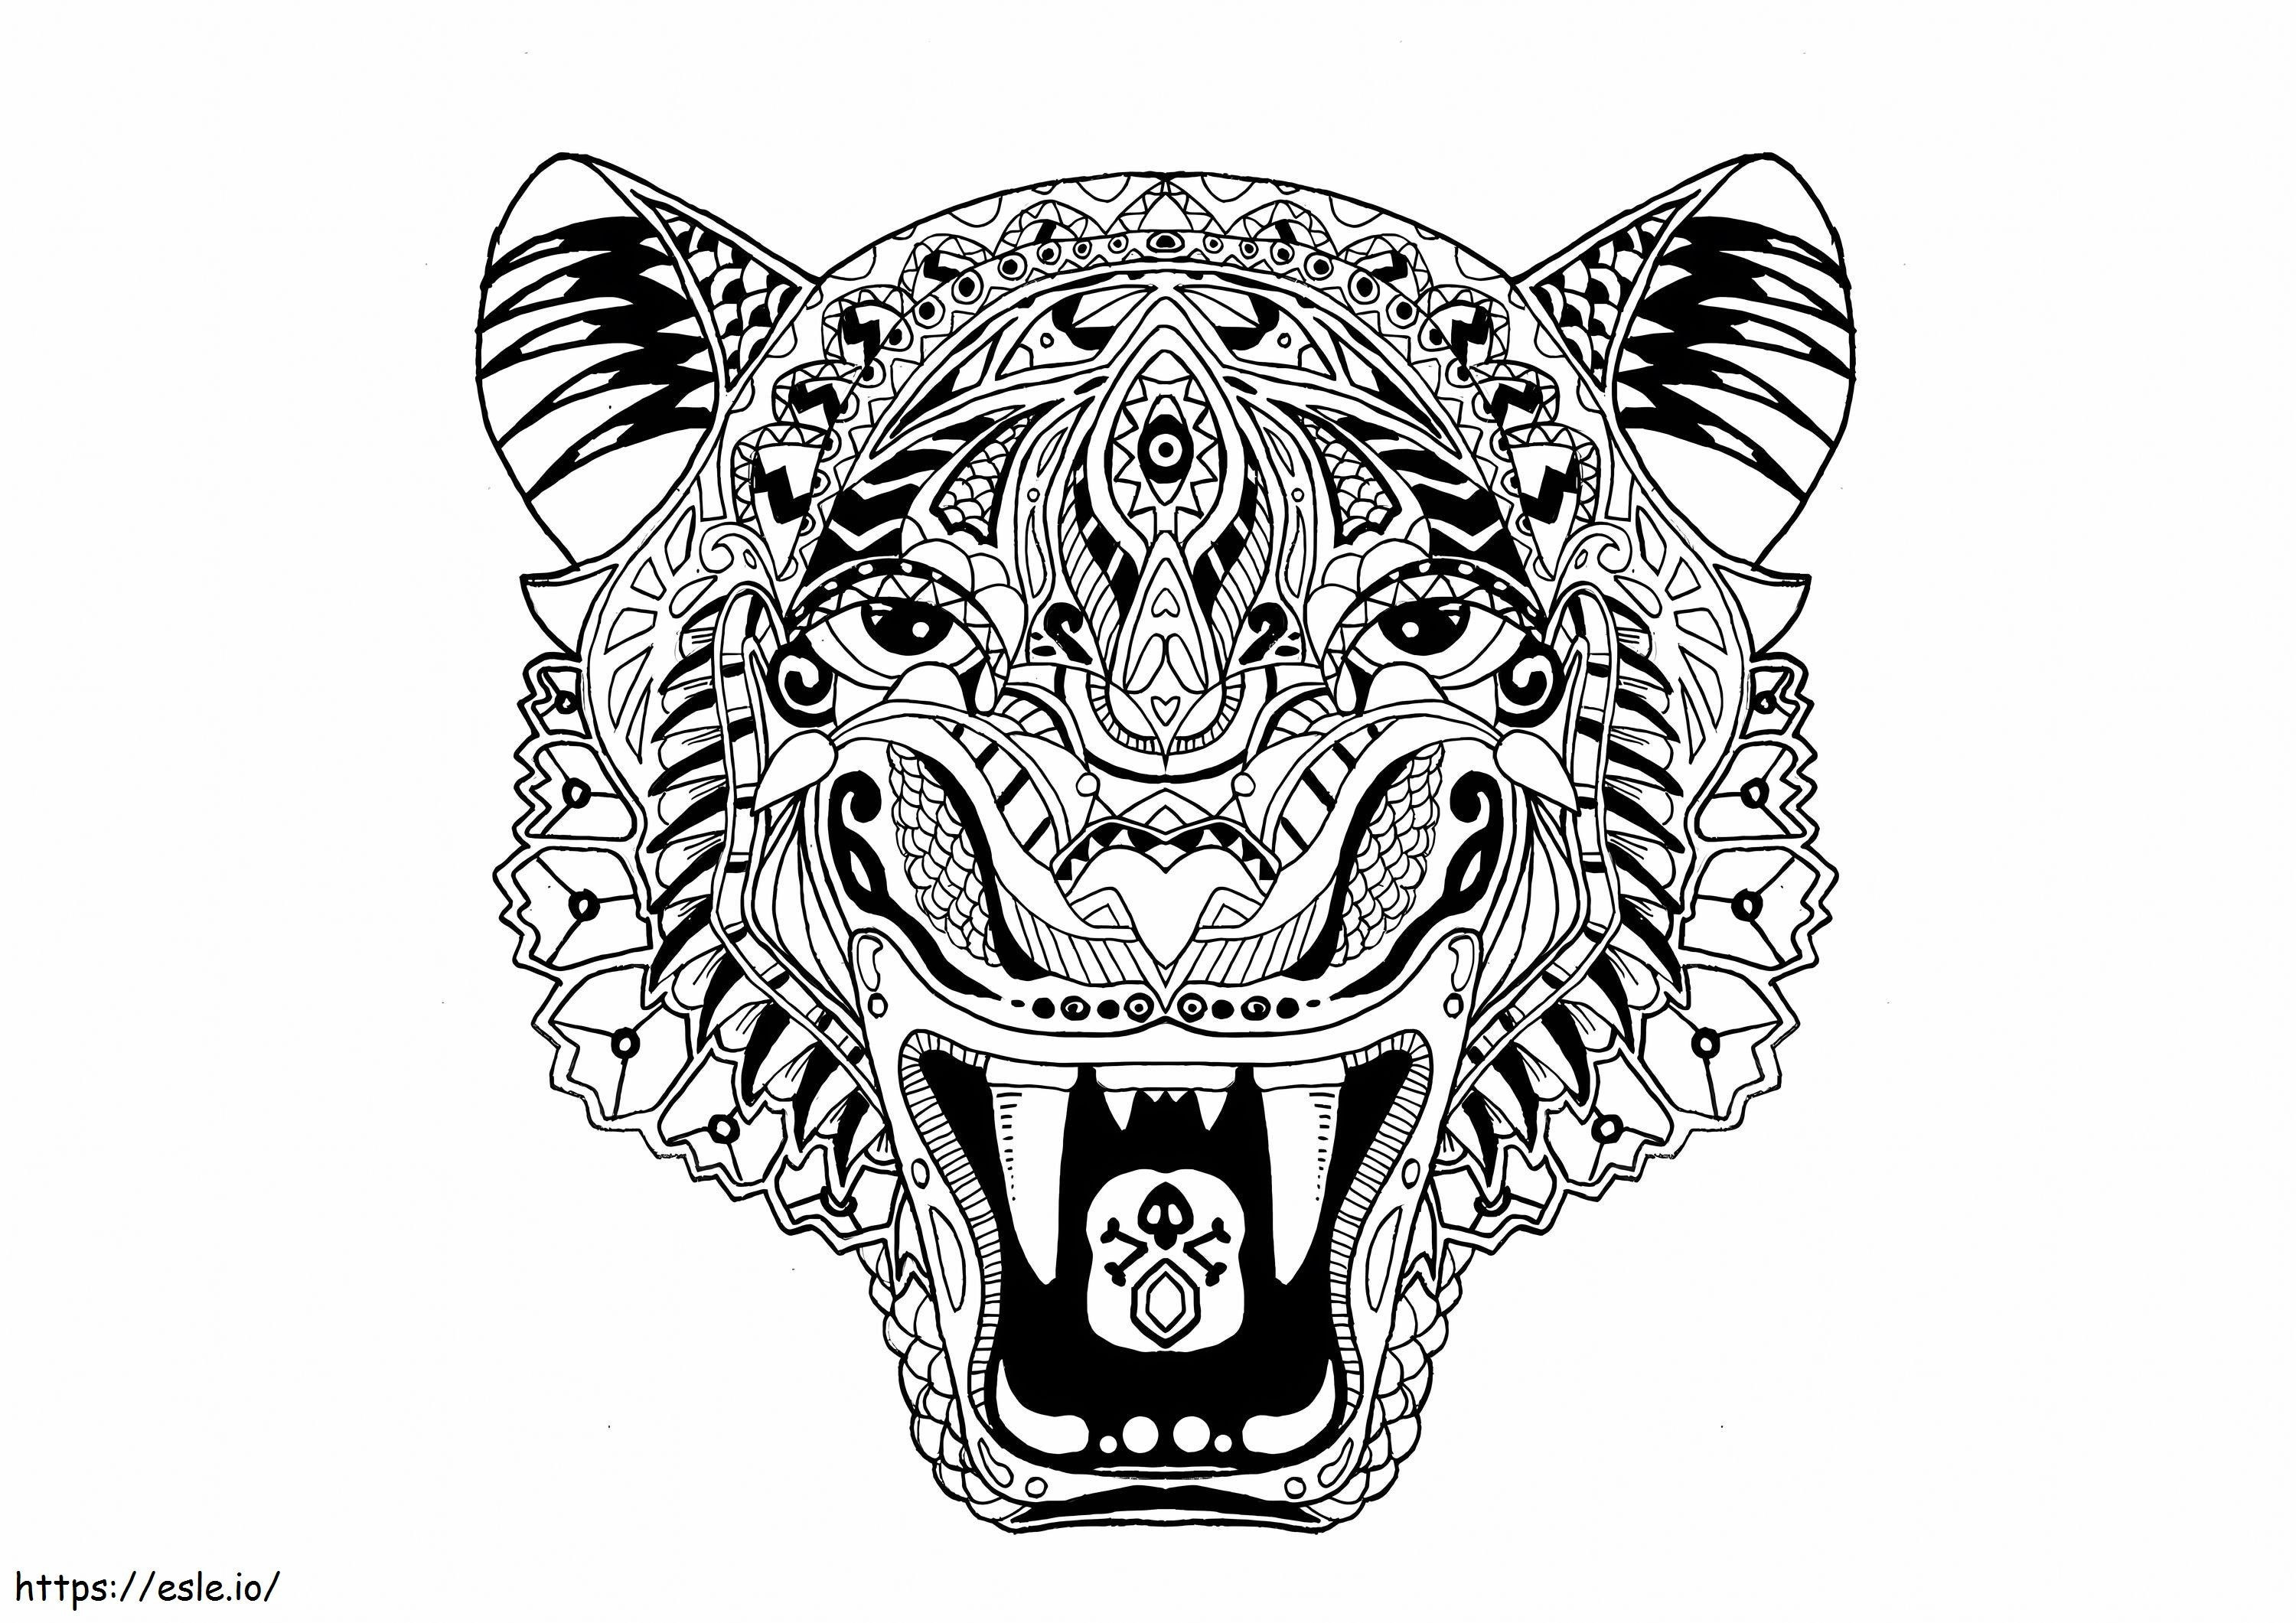 Coloriage Mandala tête de tigre à imprimer dessin